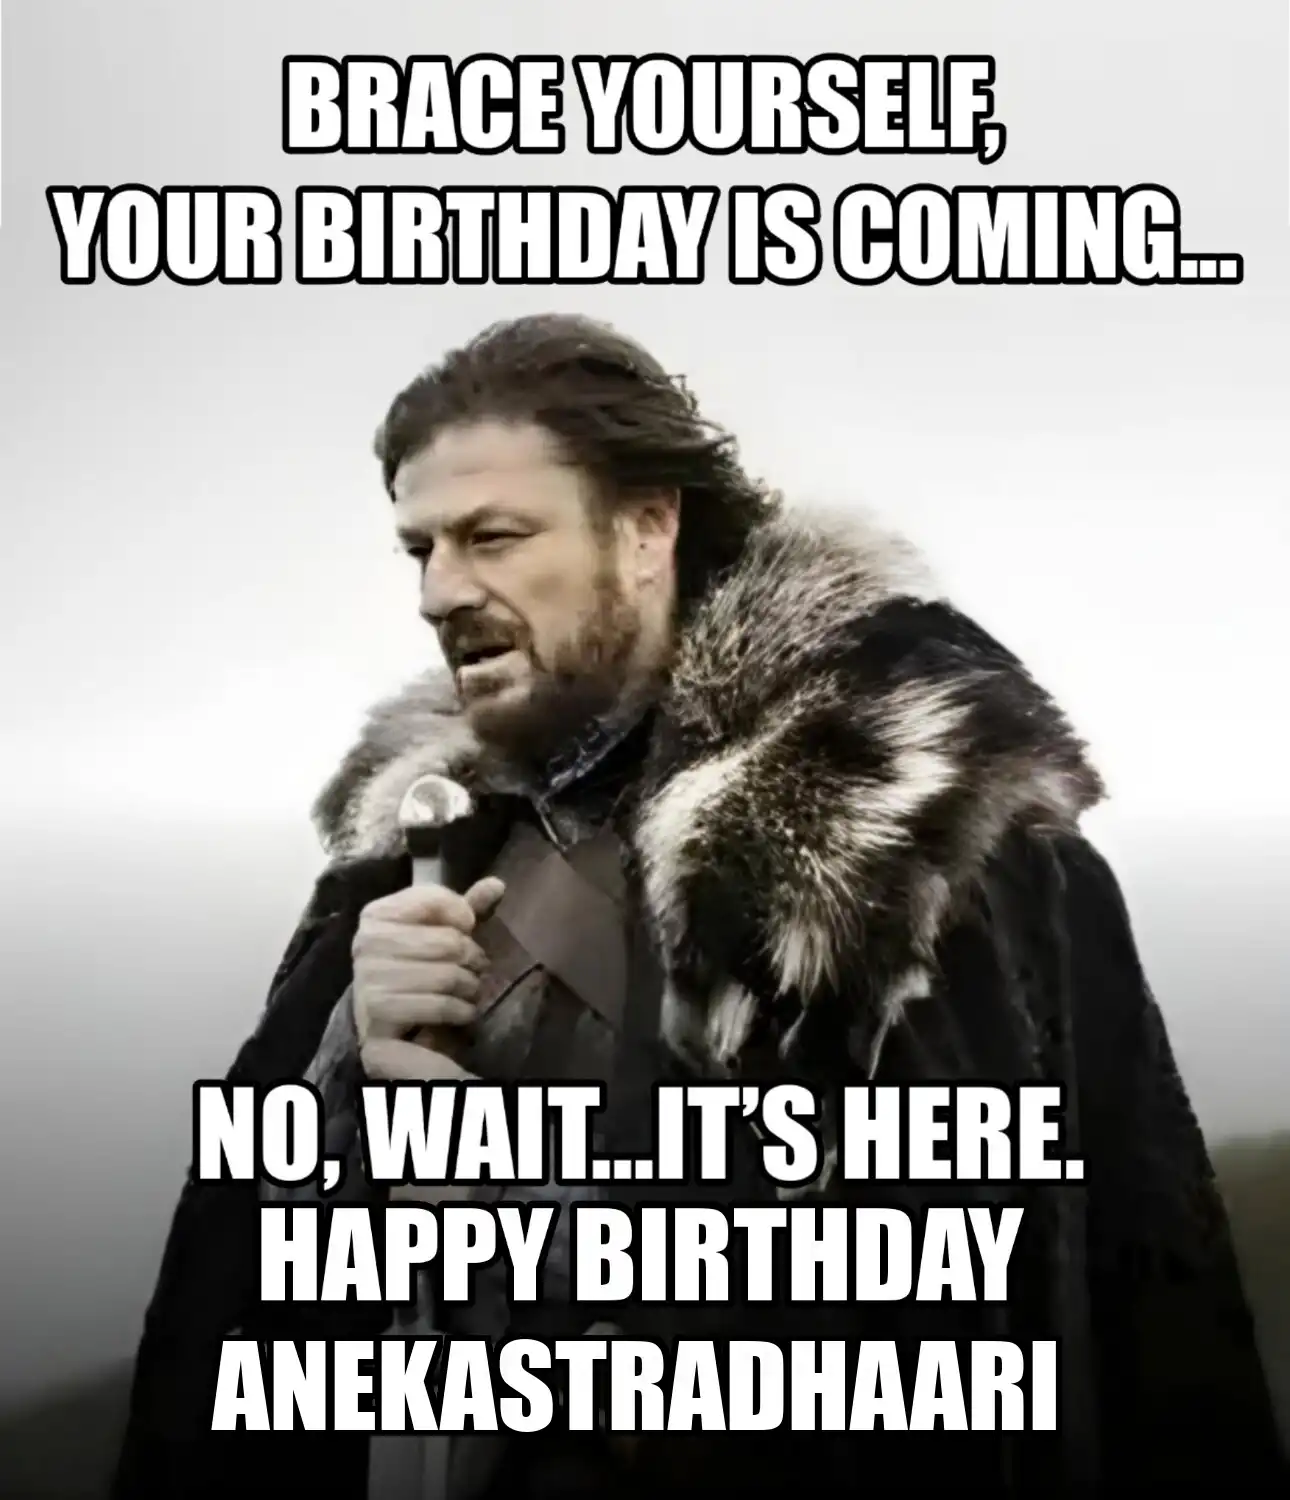 Happy Birthday Anekastradhaari Brace Yourself Your Birthday Is Coming Meme